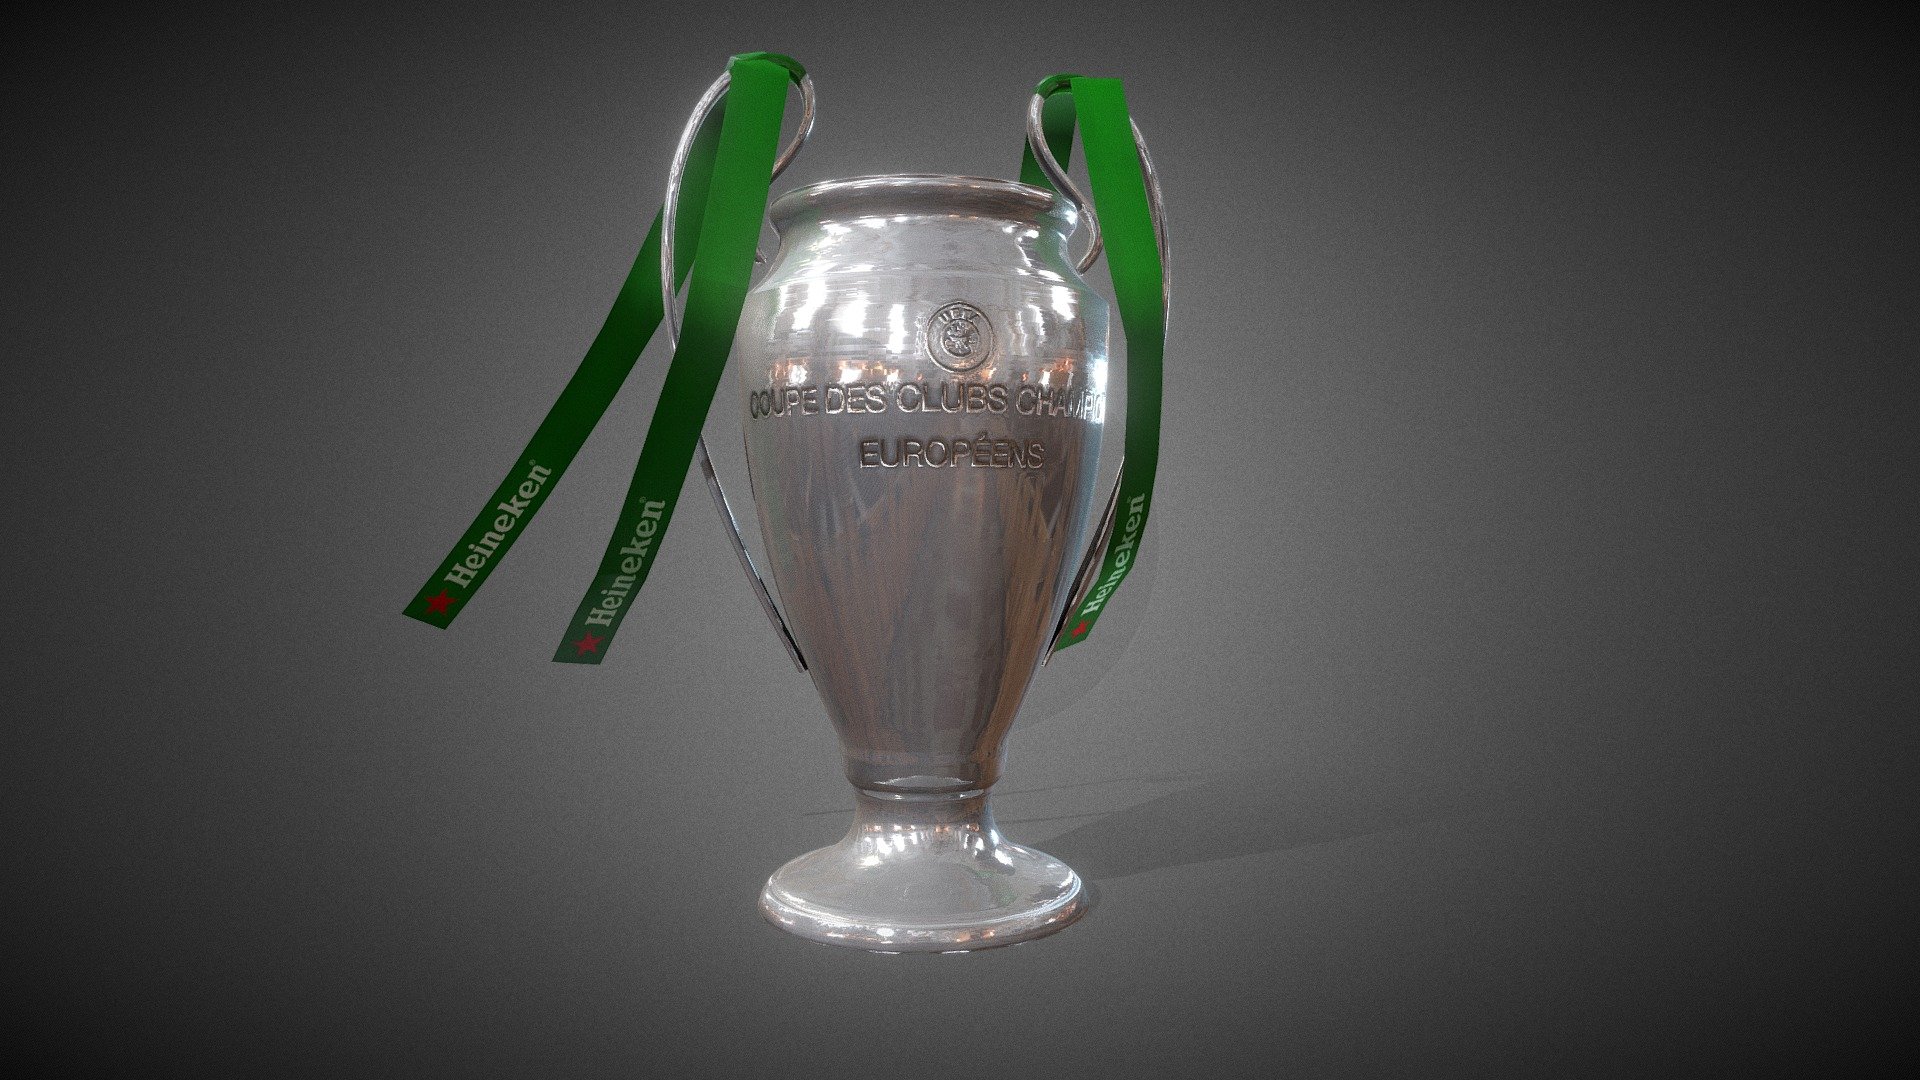 Trophy Champions League - Heineken